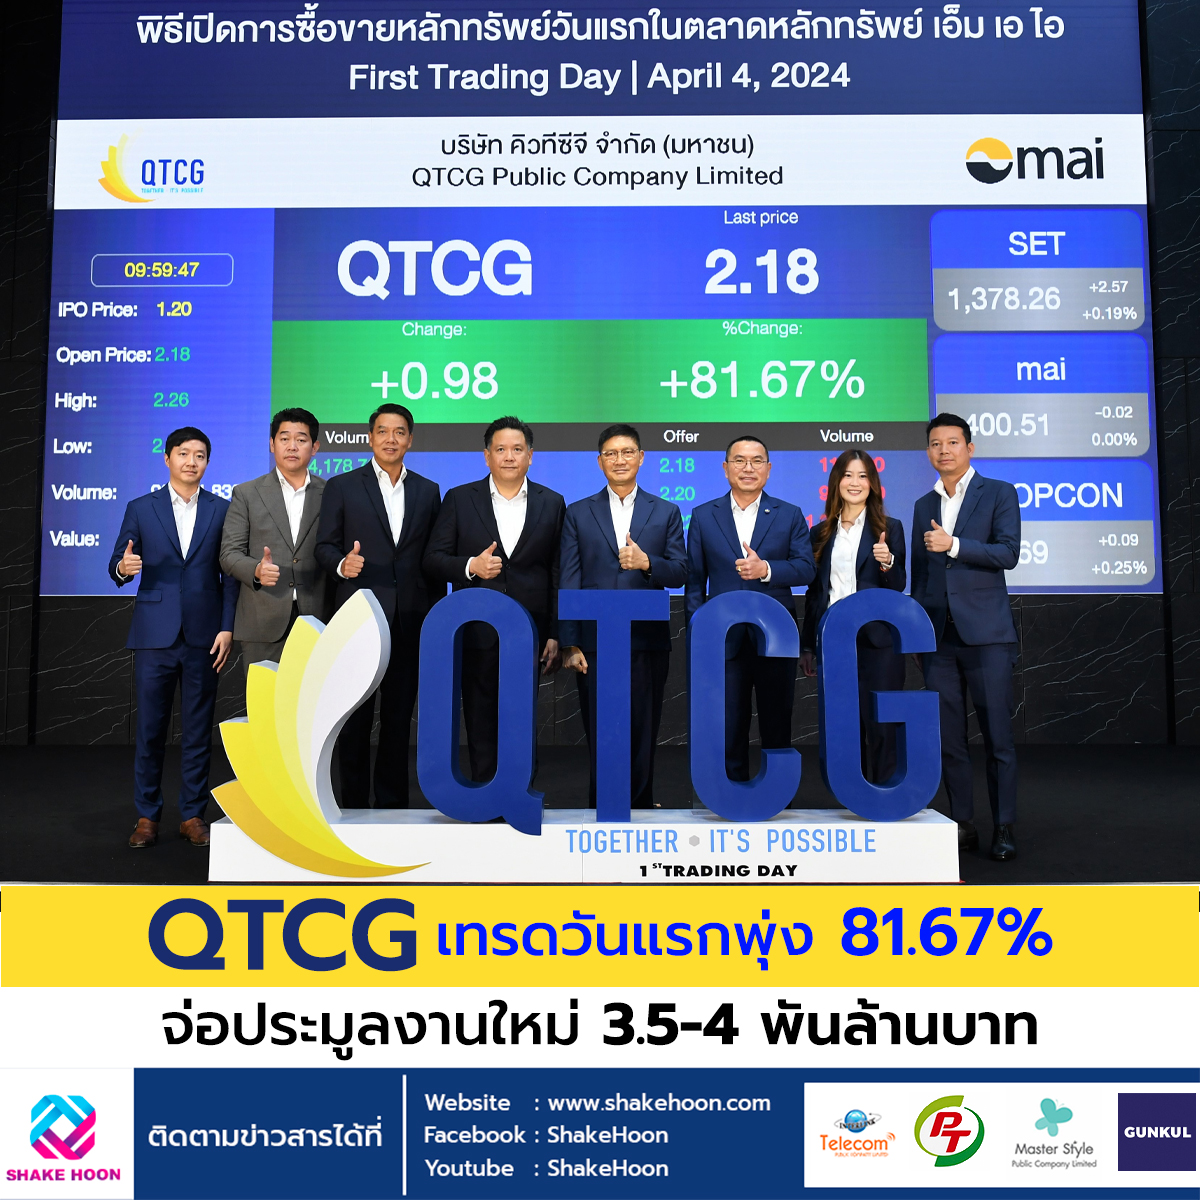 QTCG เทรดวันแรกพุ่ง 81.67% จ่อประมูลงานใหม่ 3.5-4 พันล้านบาท